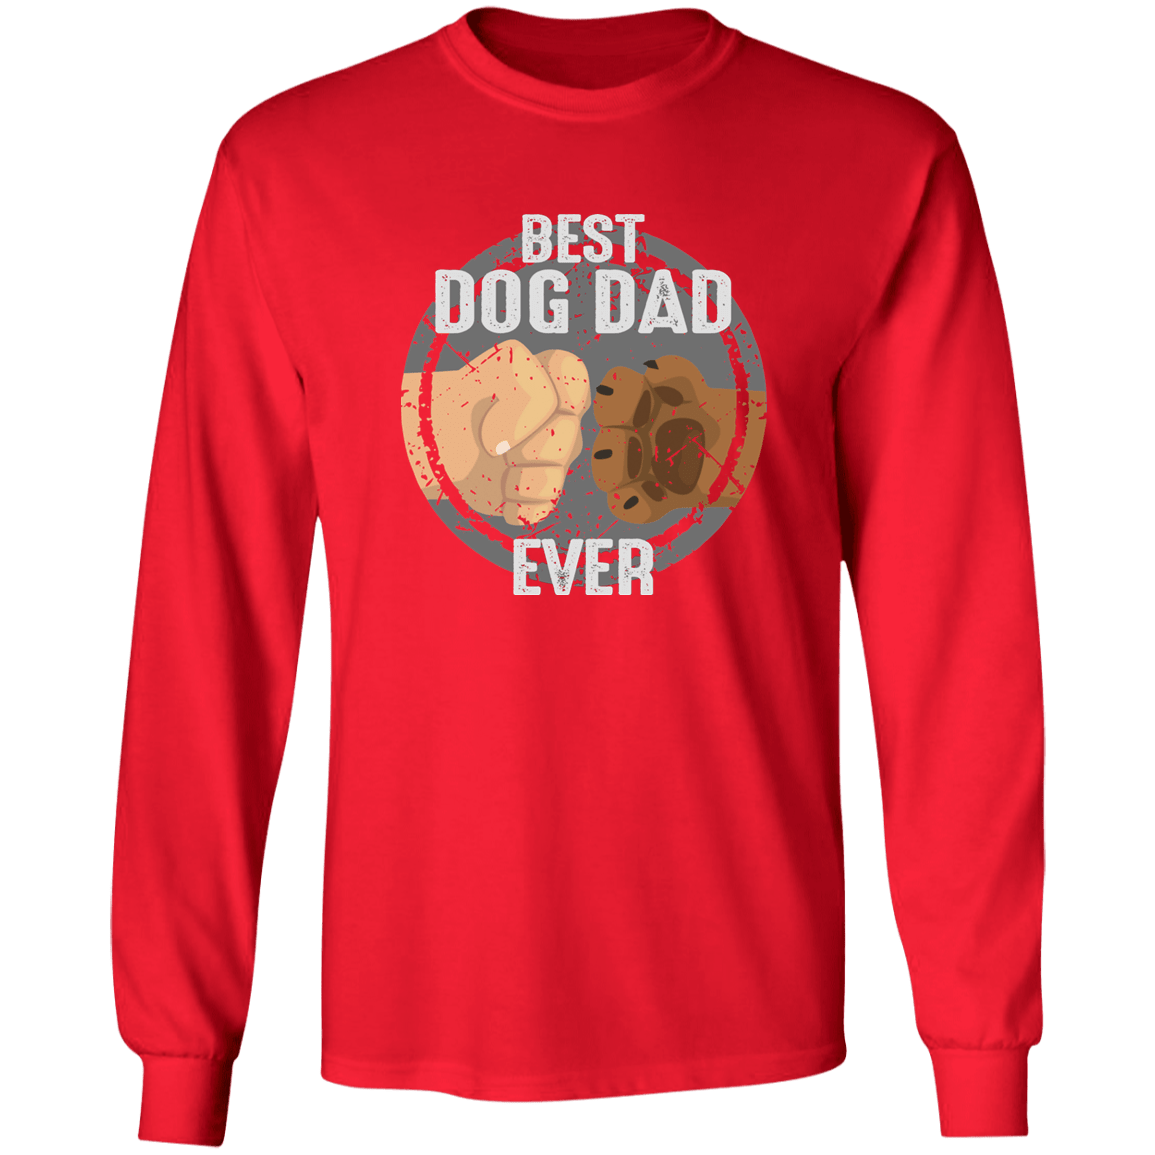 Best Dog Dad Ever - Long Sleeve T Shirt.